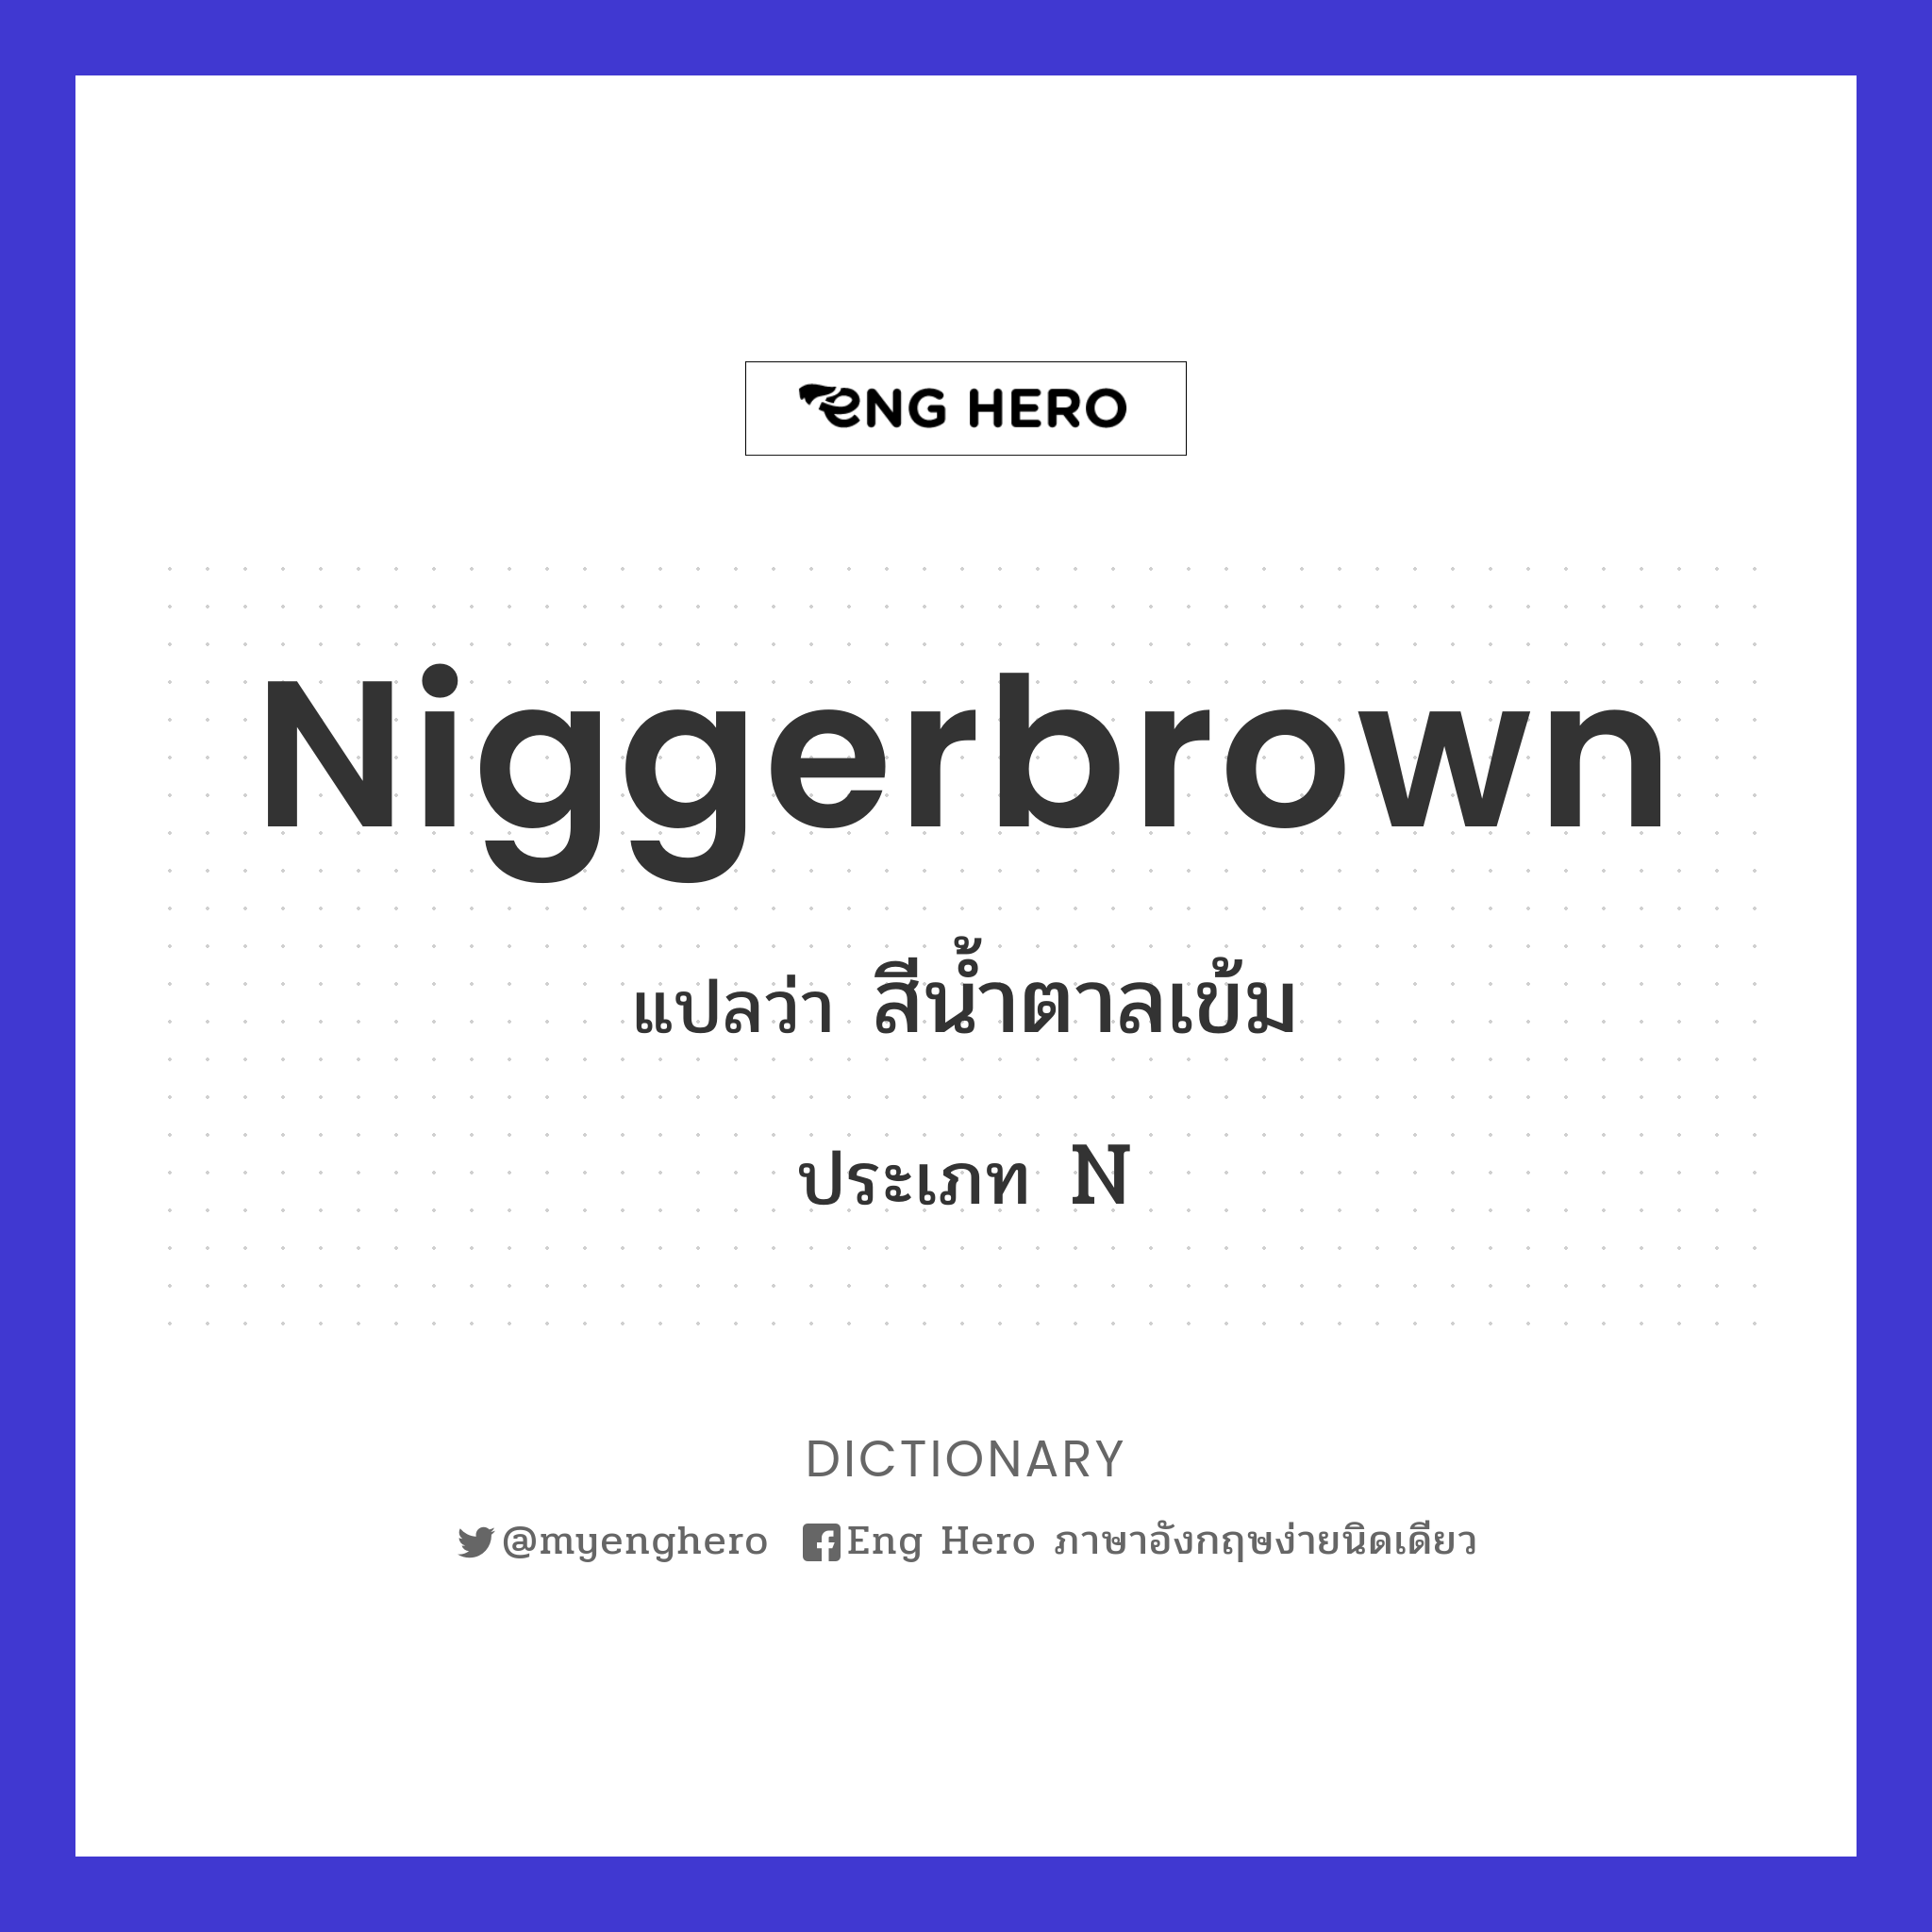 niggerbrown